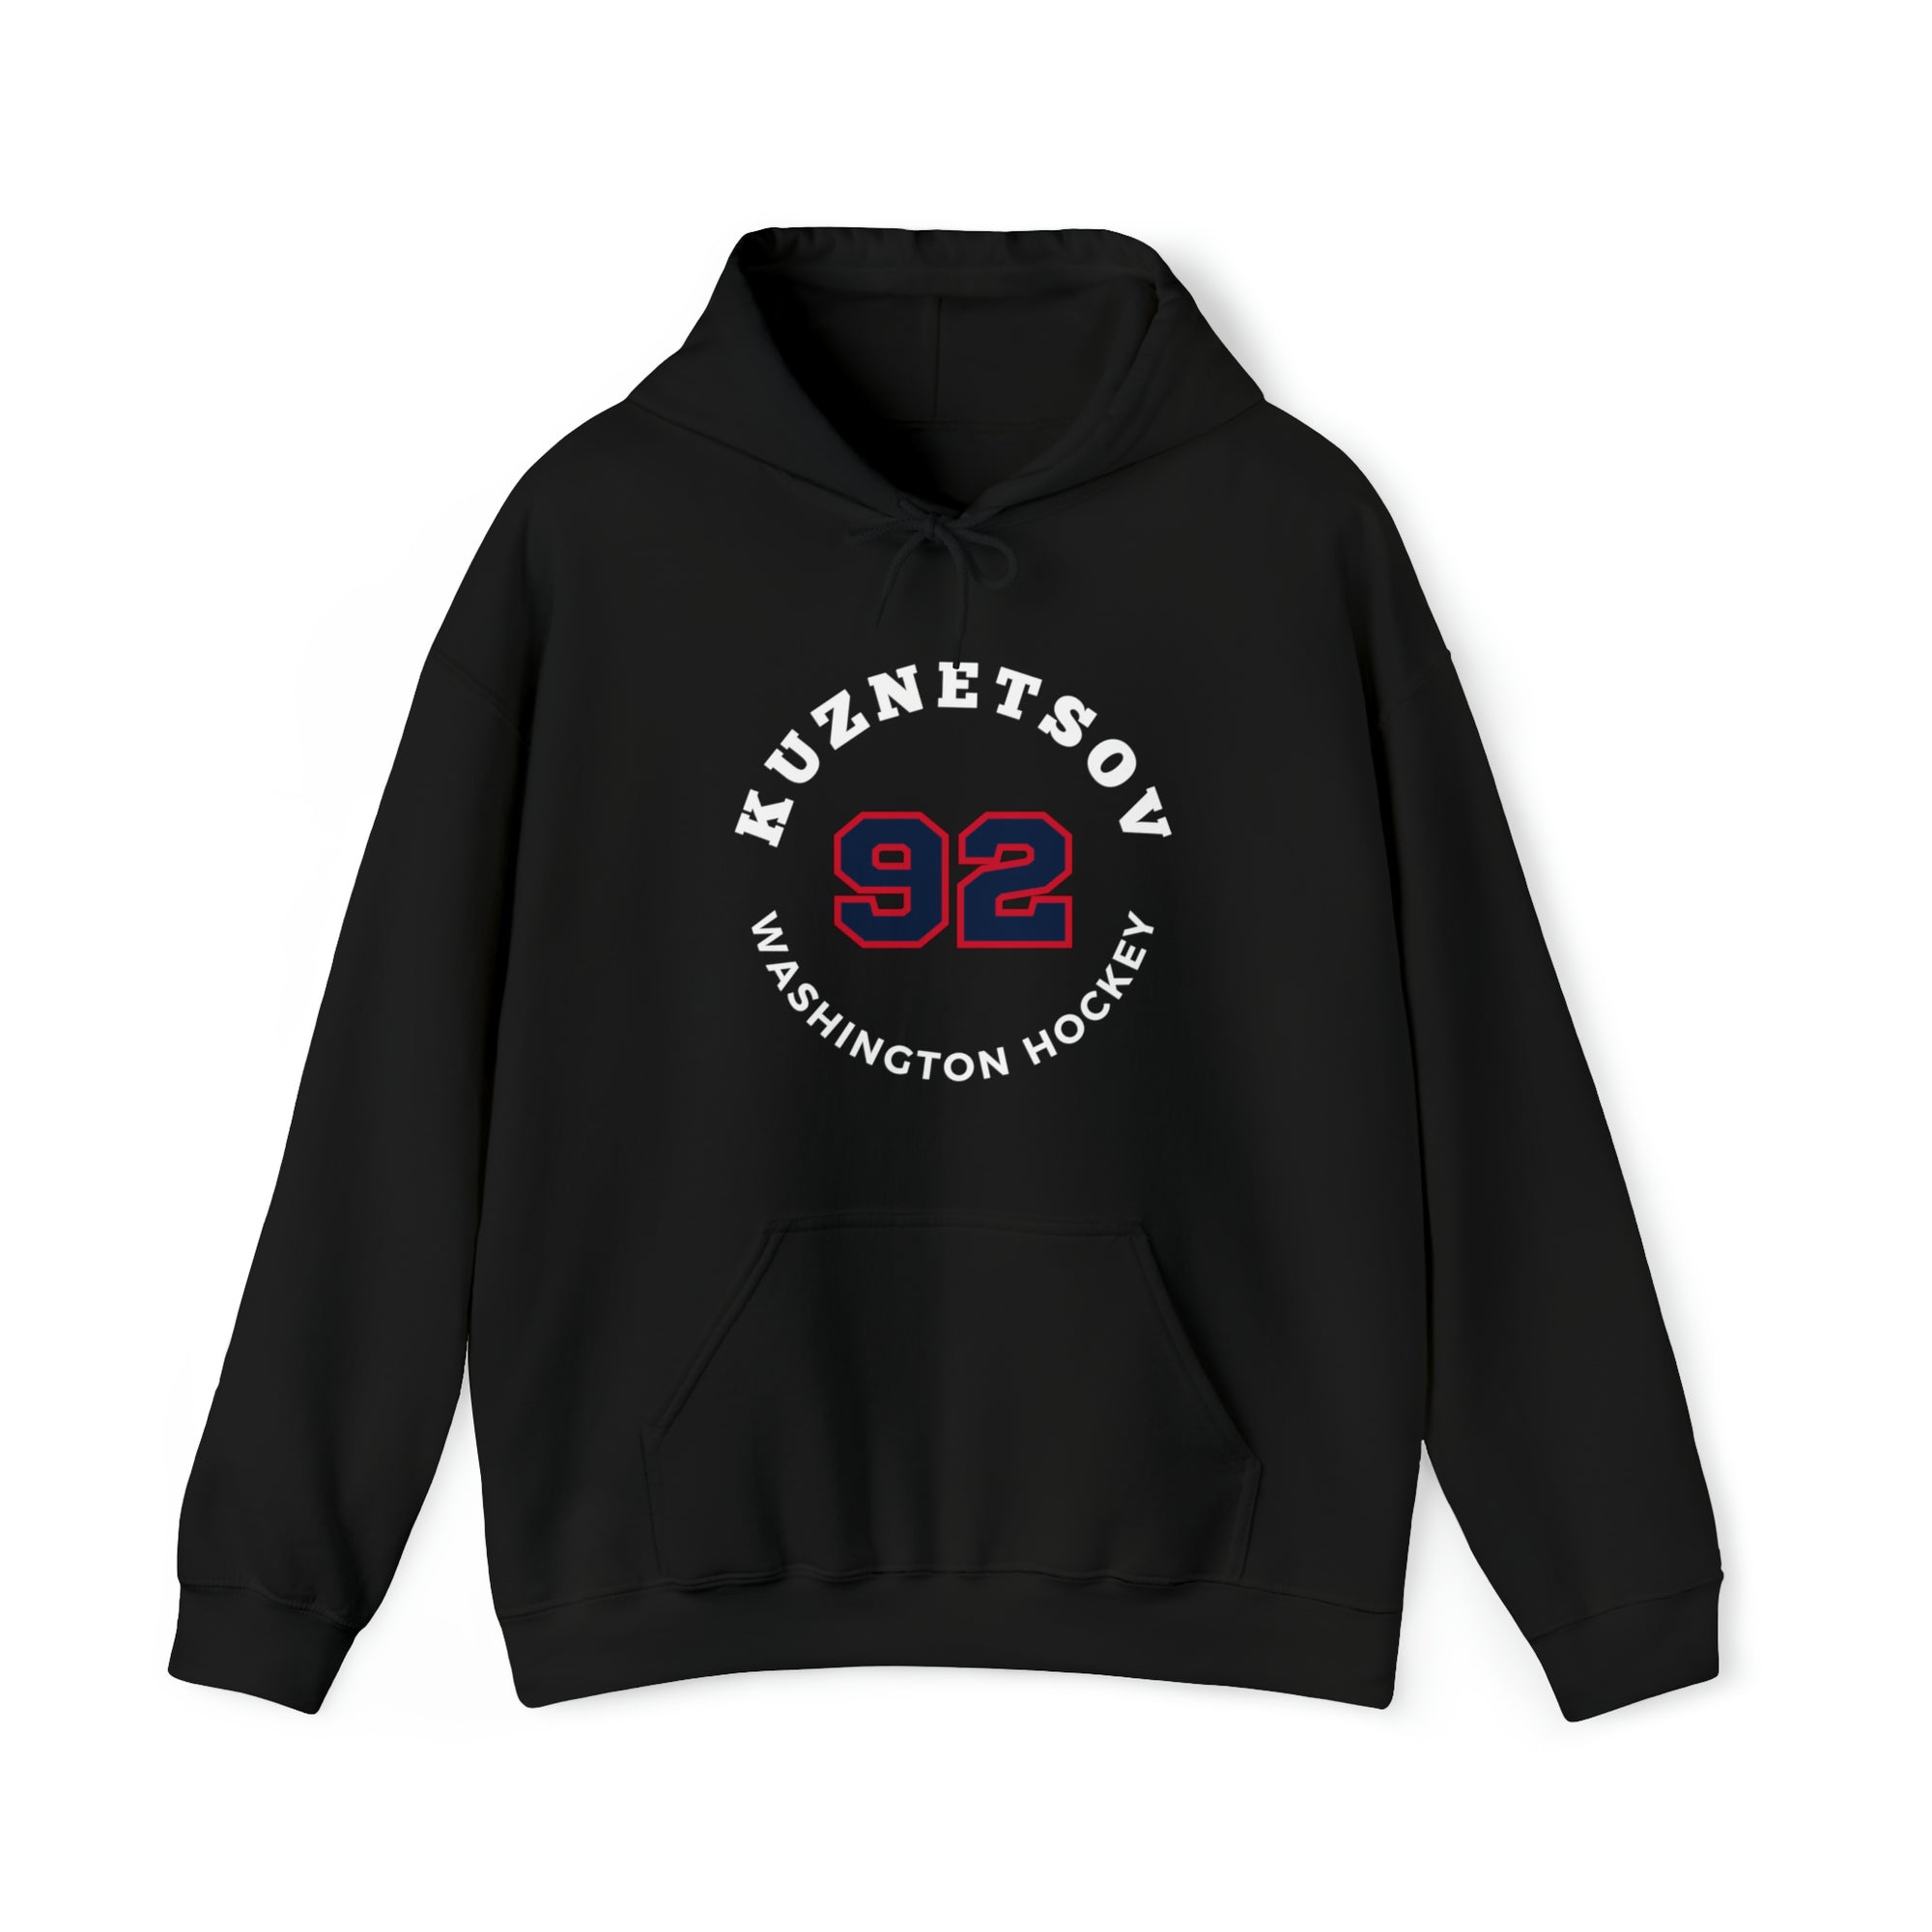 Kuznetsov 92 Washington Hockey Number Arch Design Unisex Hooded Sweatshirt